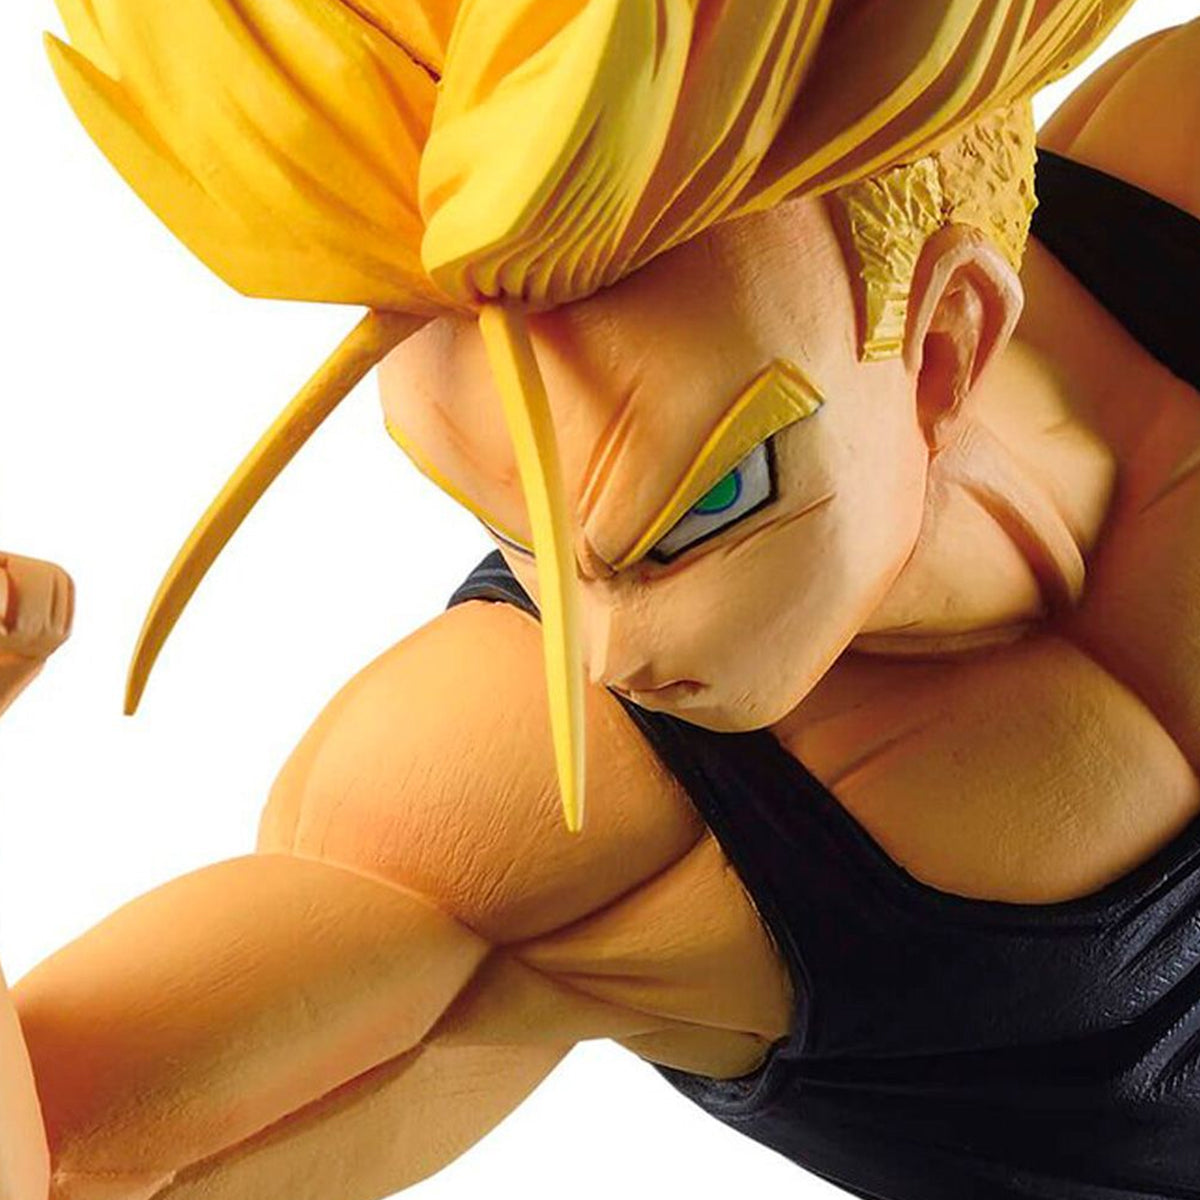 Action Figure Trunks (Super Sayajin) (Dragon Ball Z) (Match Makers) Bandai  Banpresto - Arena Games - Loja Geek